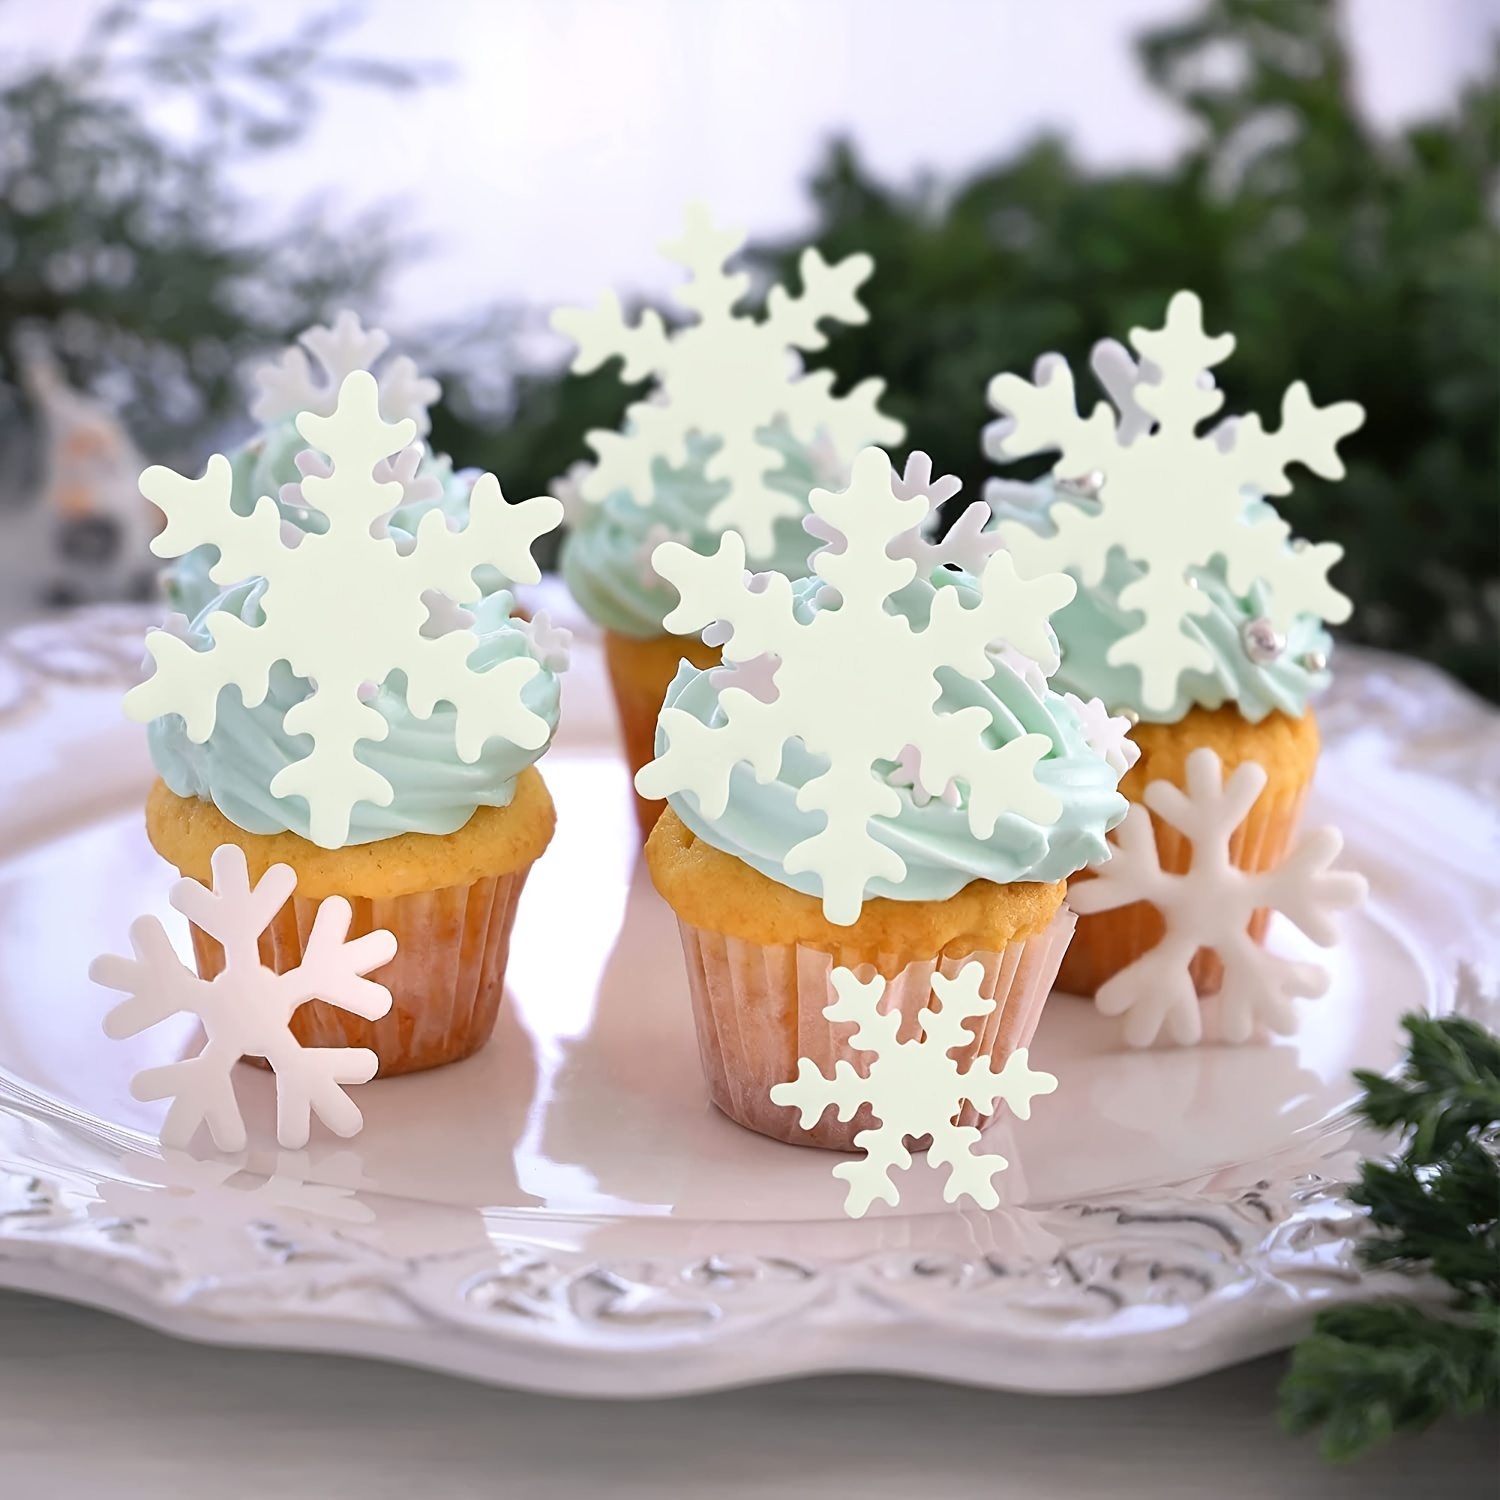 Edible snowflakes for cake decorating 50pcs Edible Snowflakes Cake Decor Cupcake  Toppers Winter Christmas Party Cake Decor 